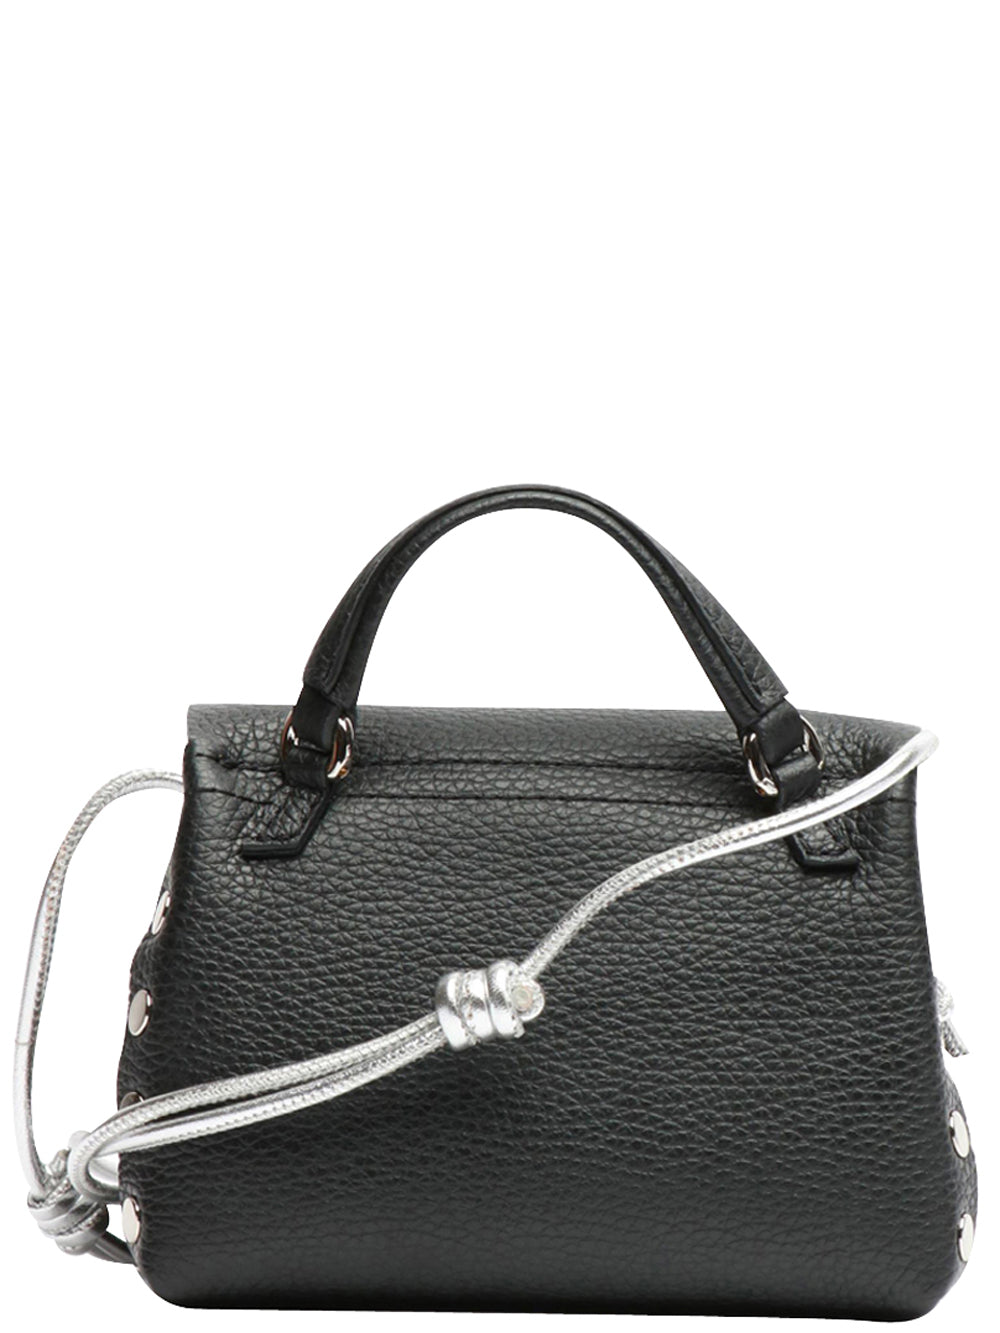 Postina Daily Candy SBaby Handbag in Black Leather